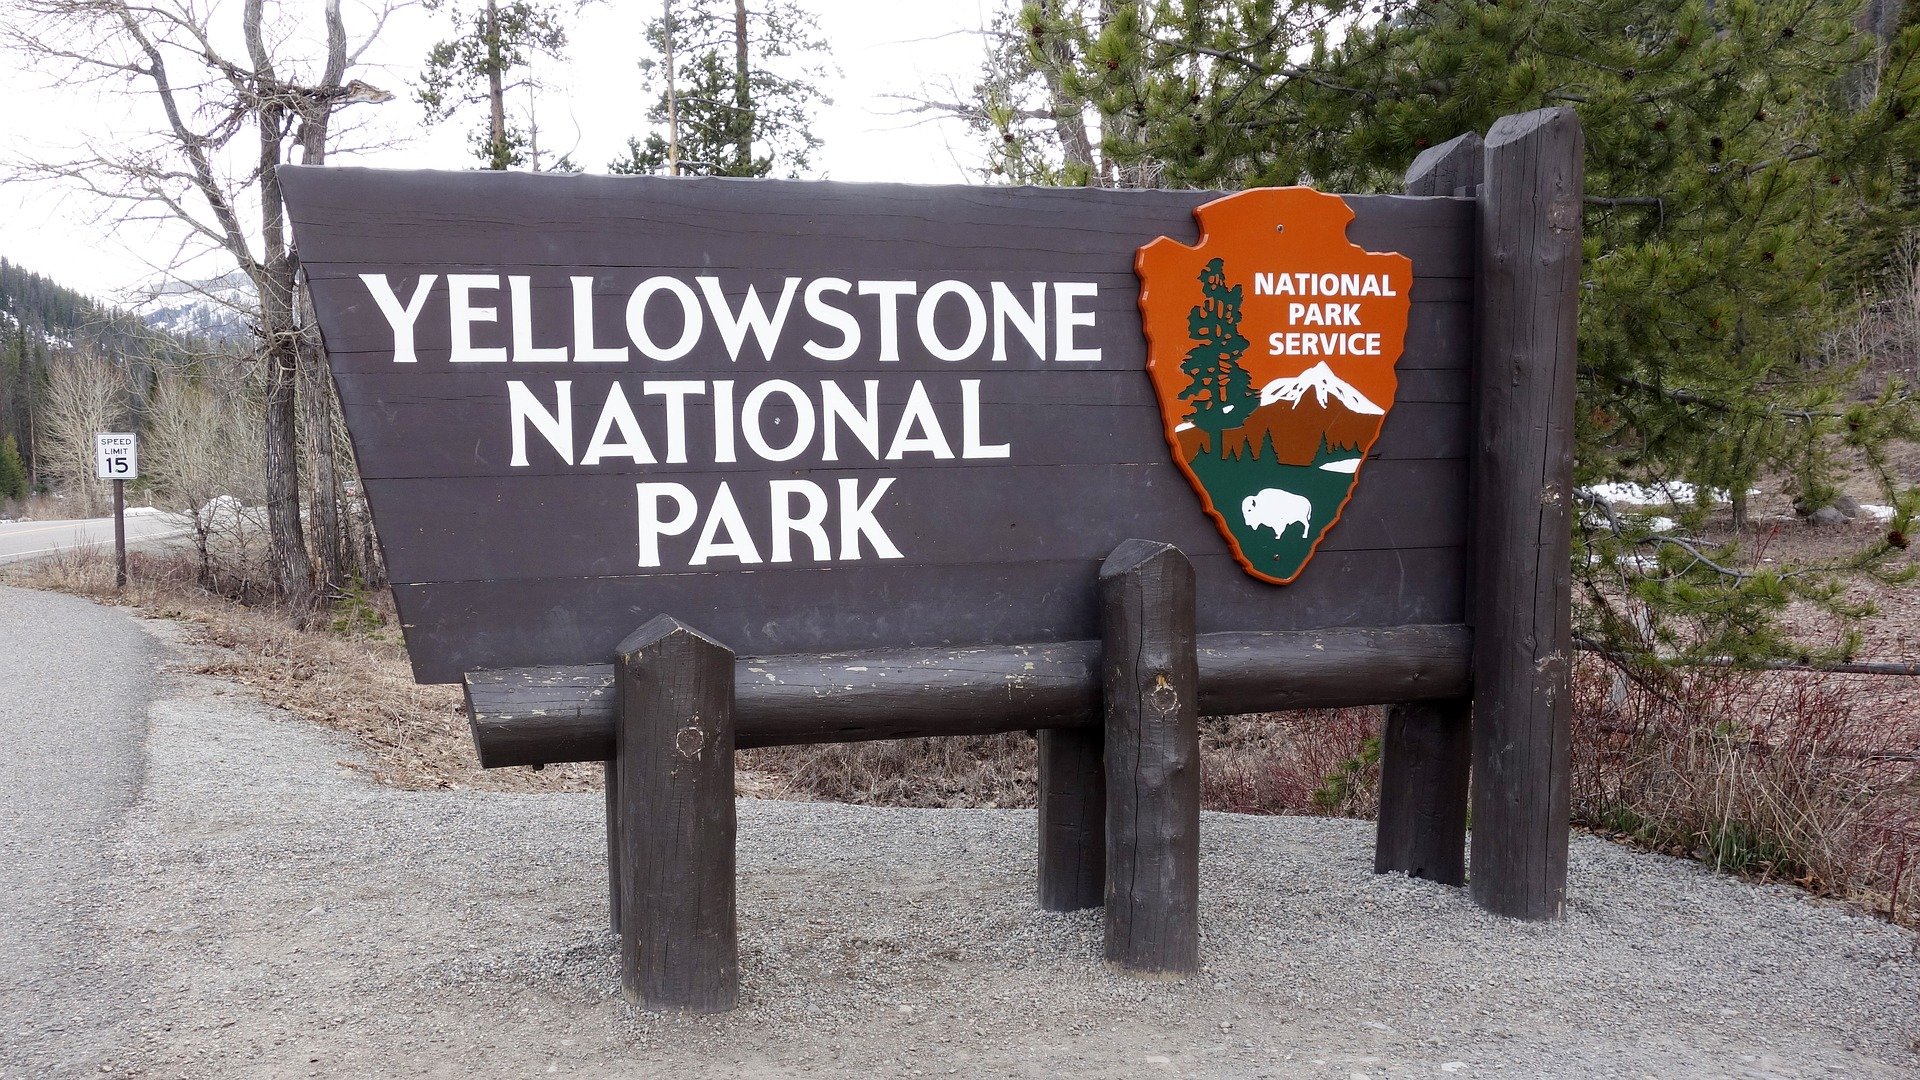 USA-Yellowstone-National-park-sign-1920